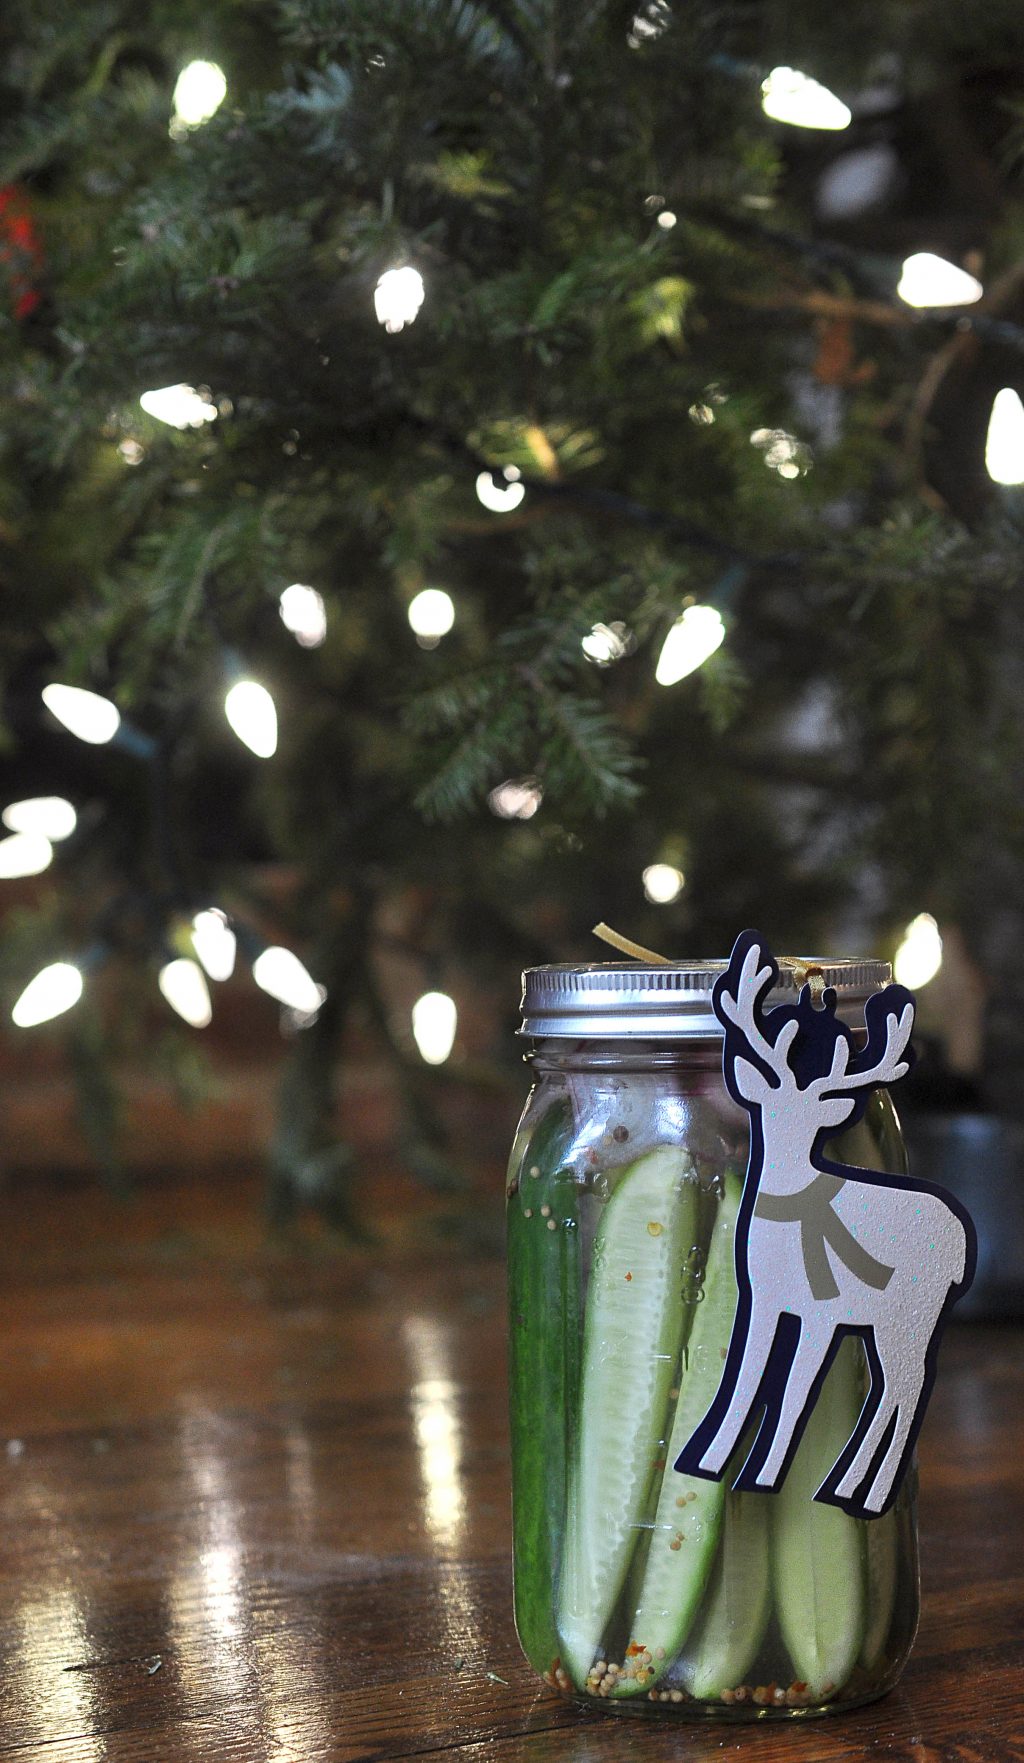 jar of pickles under the Xmas tree